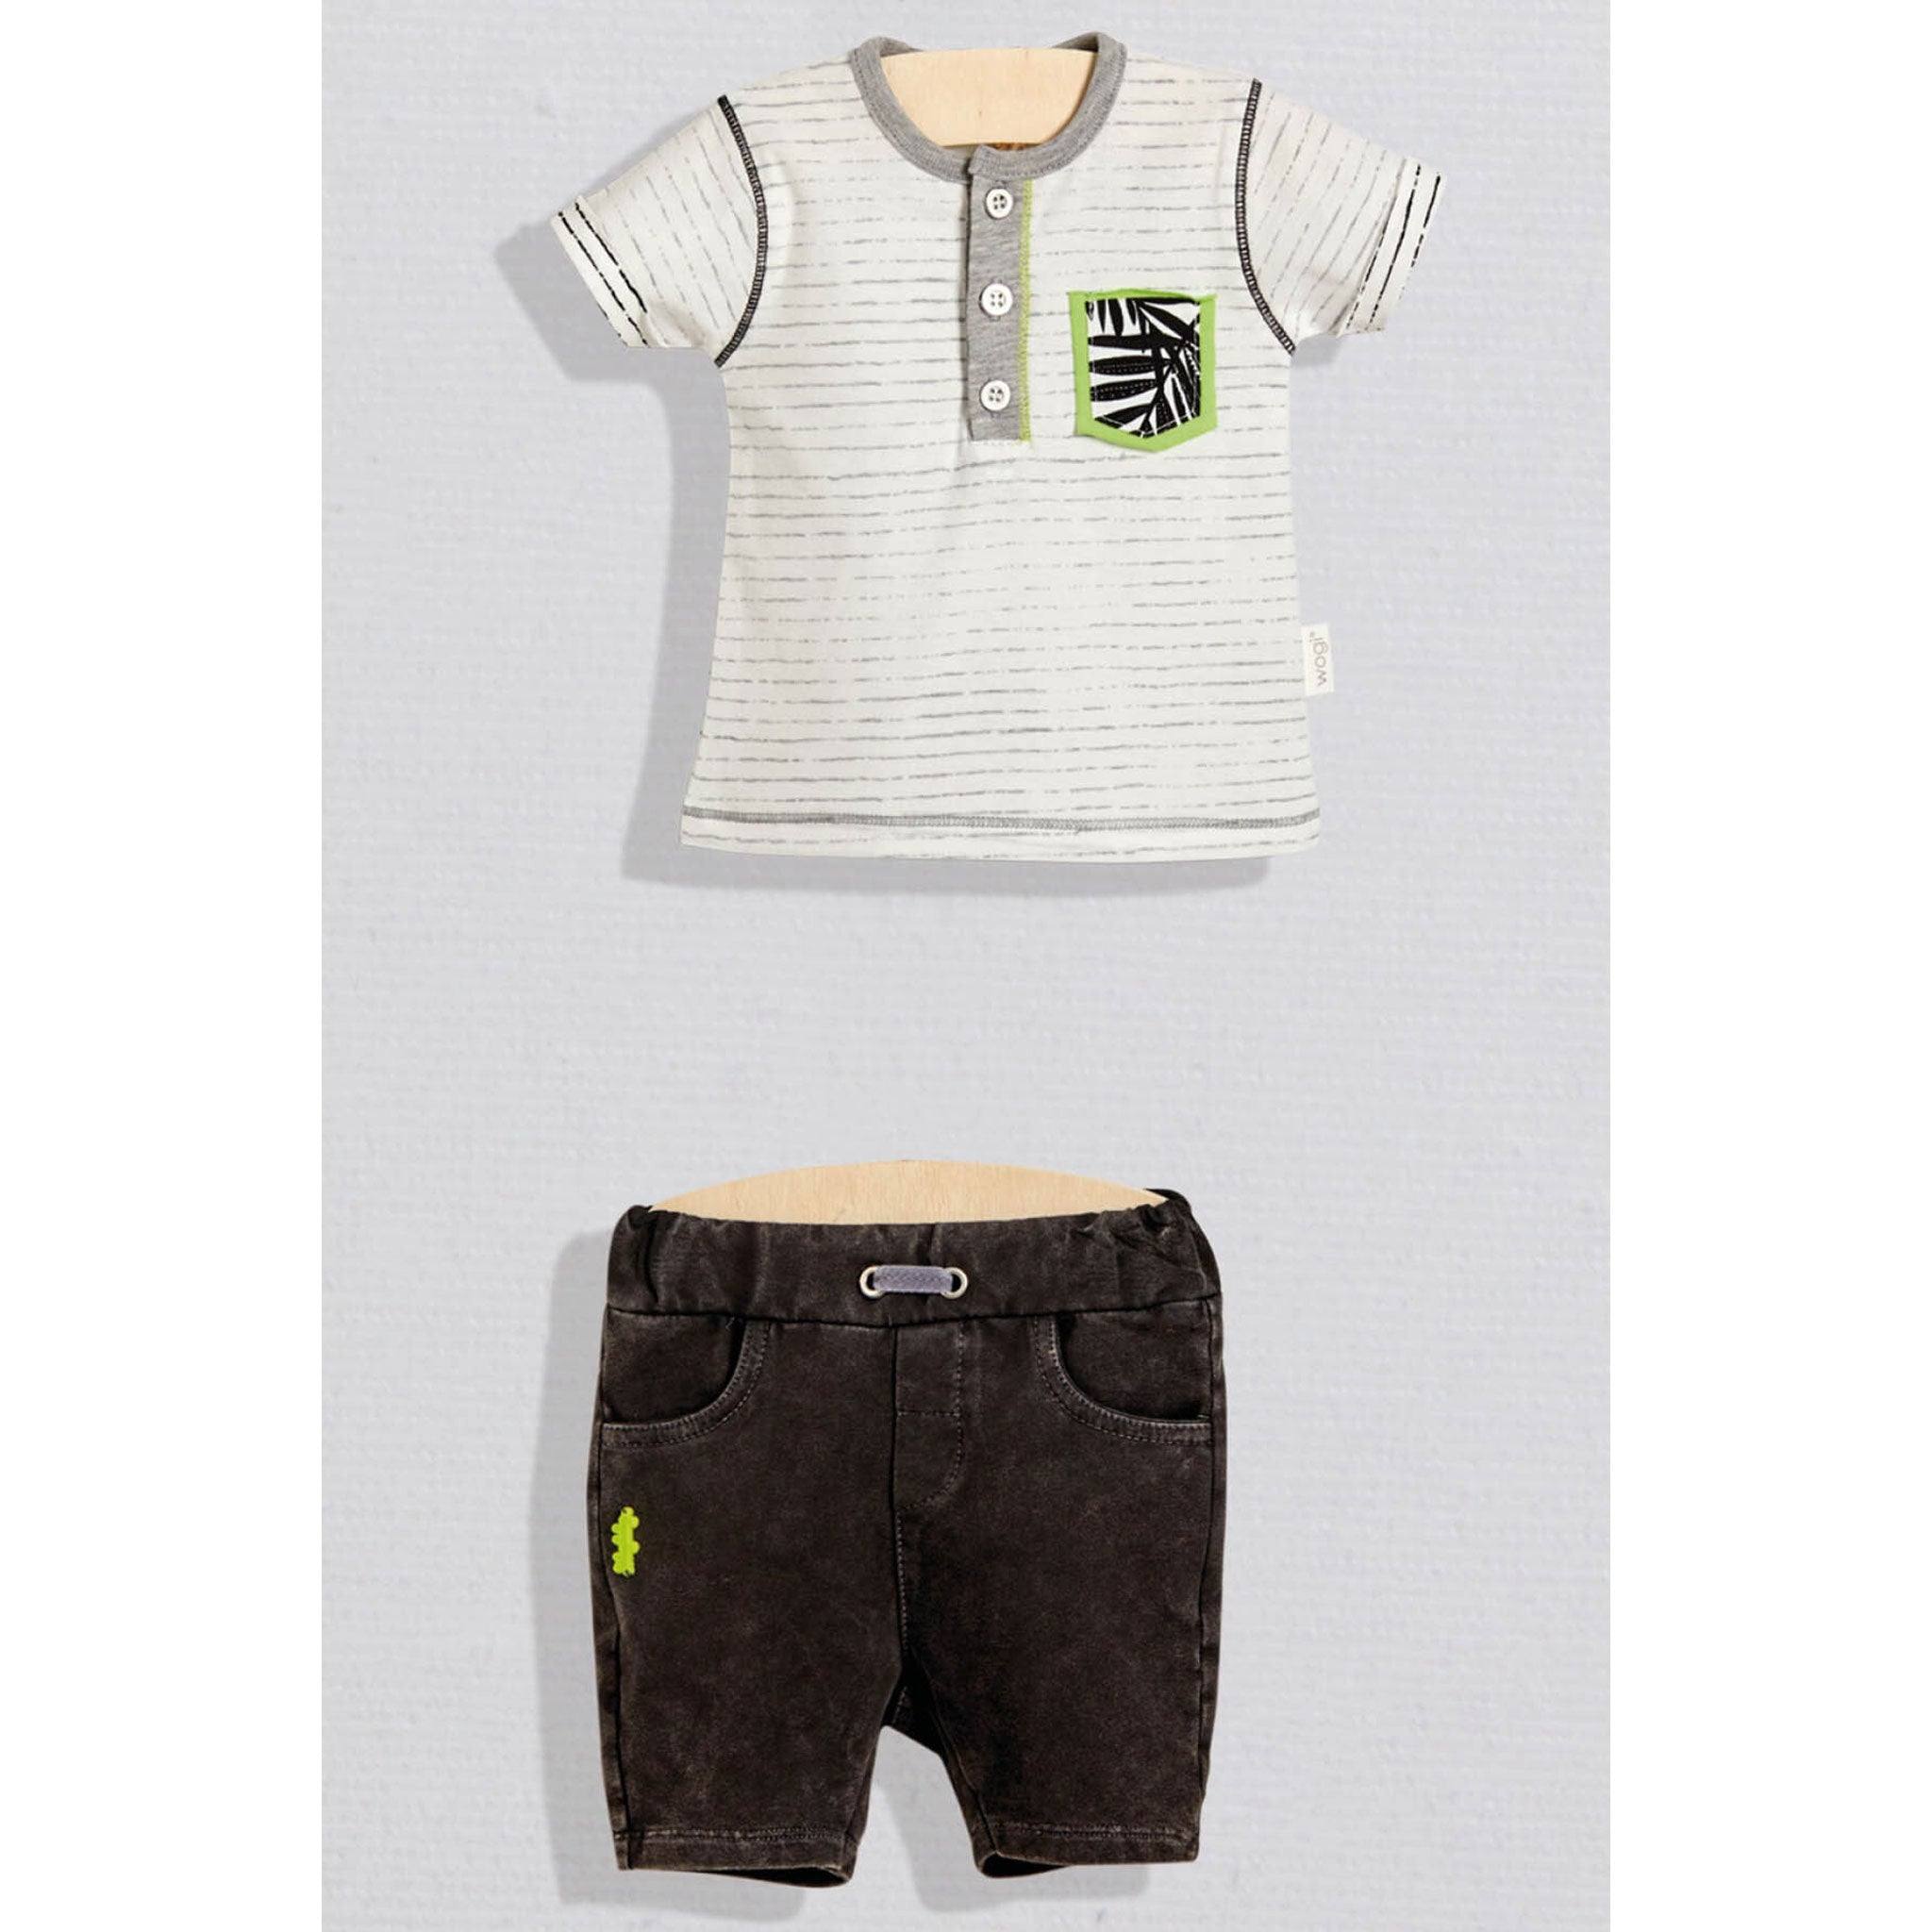 Gray Baby Short & T-shirt Set - Gray Baby Short & T-shirt Set - 3-6 Months - Wogi - Melymod